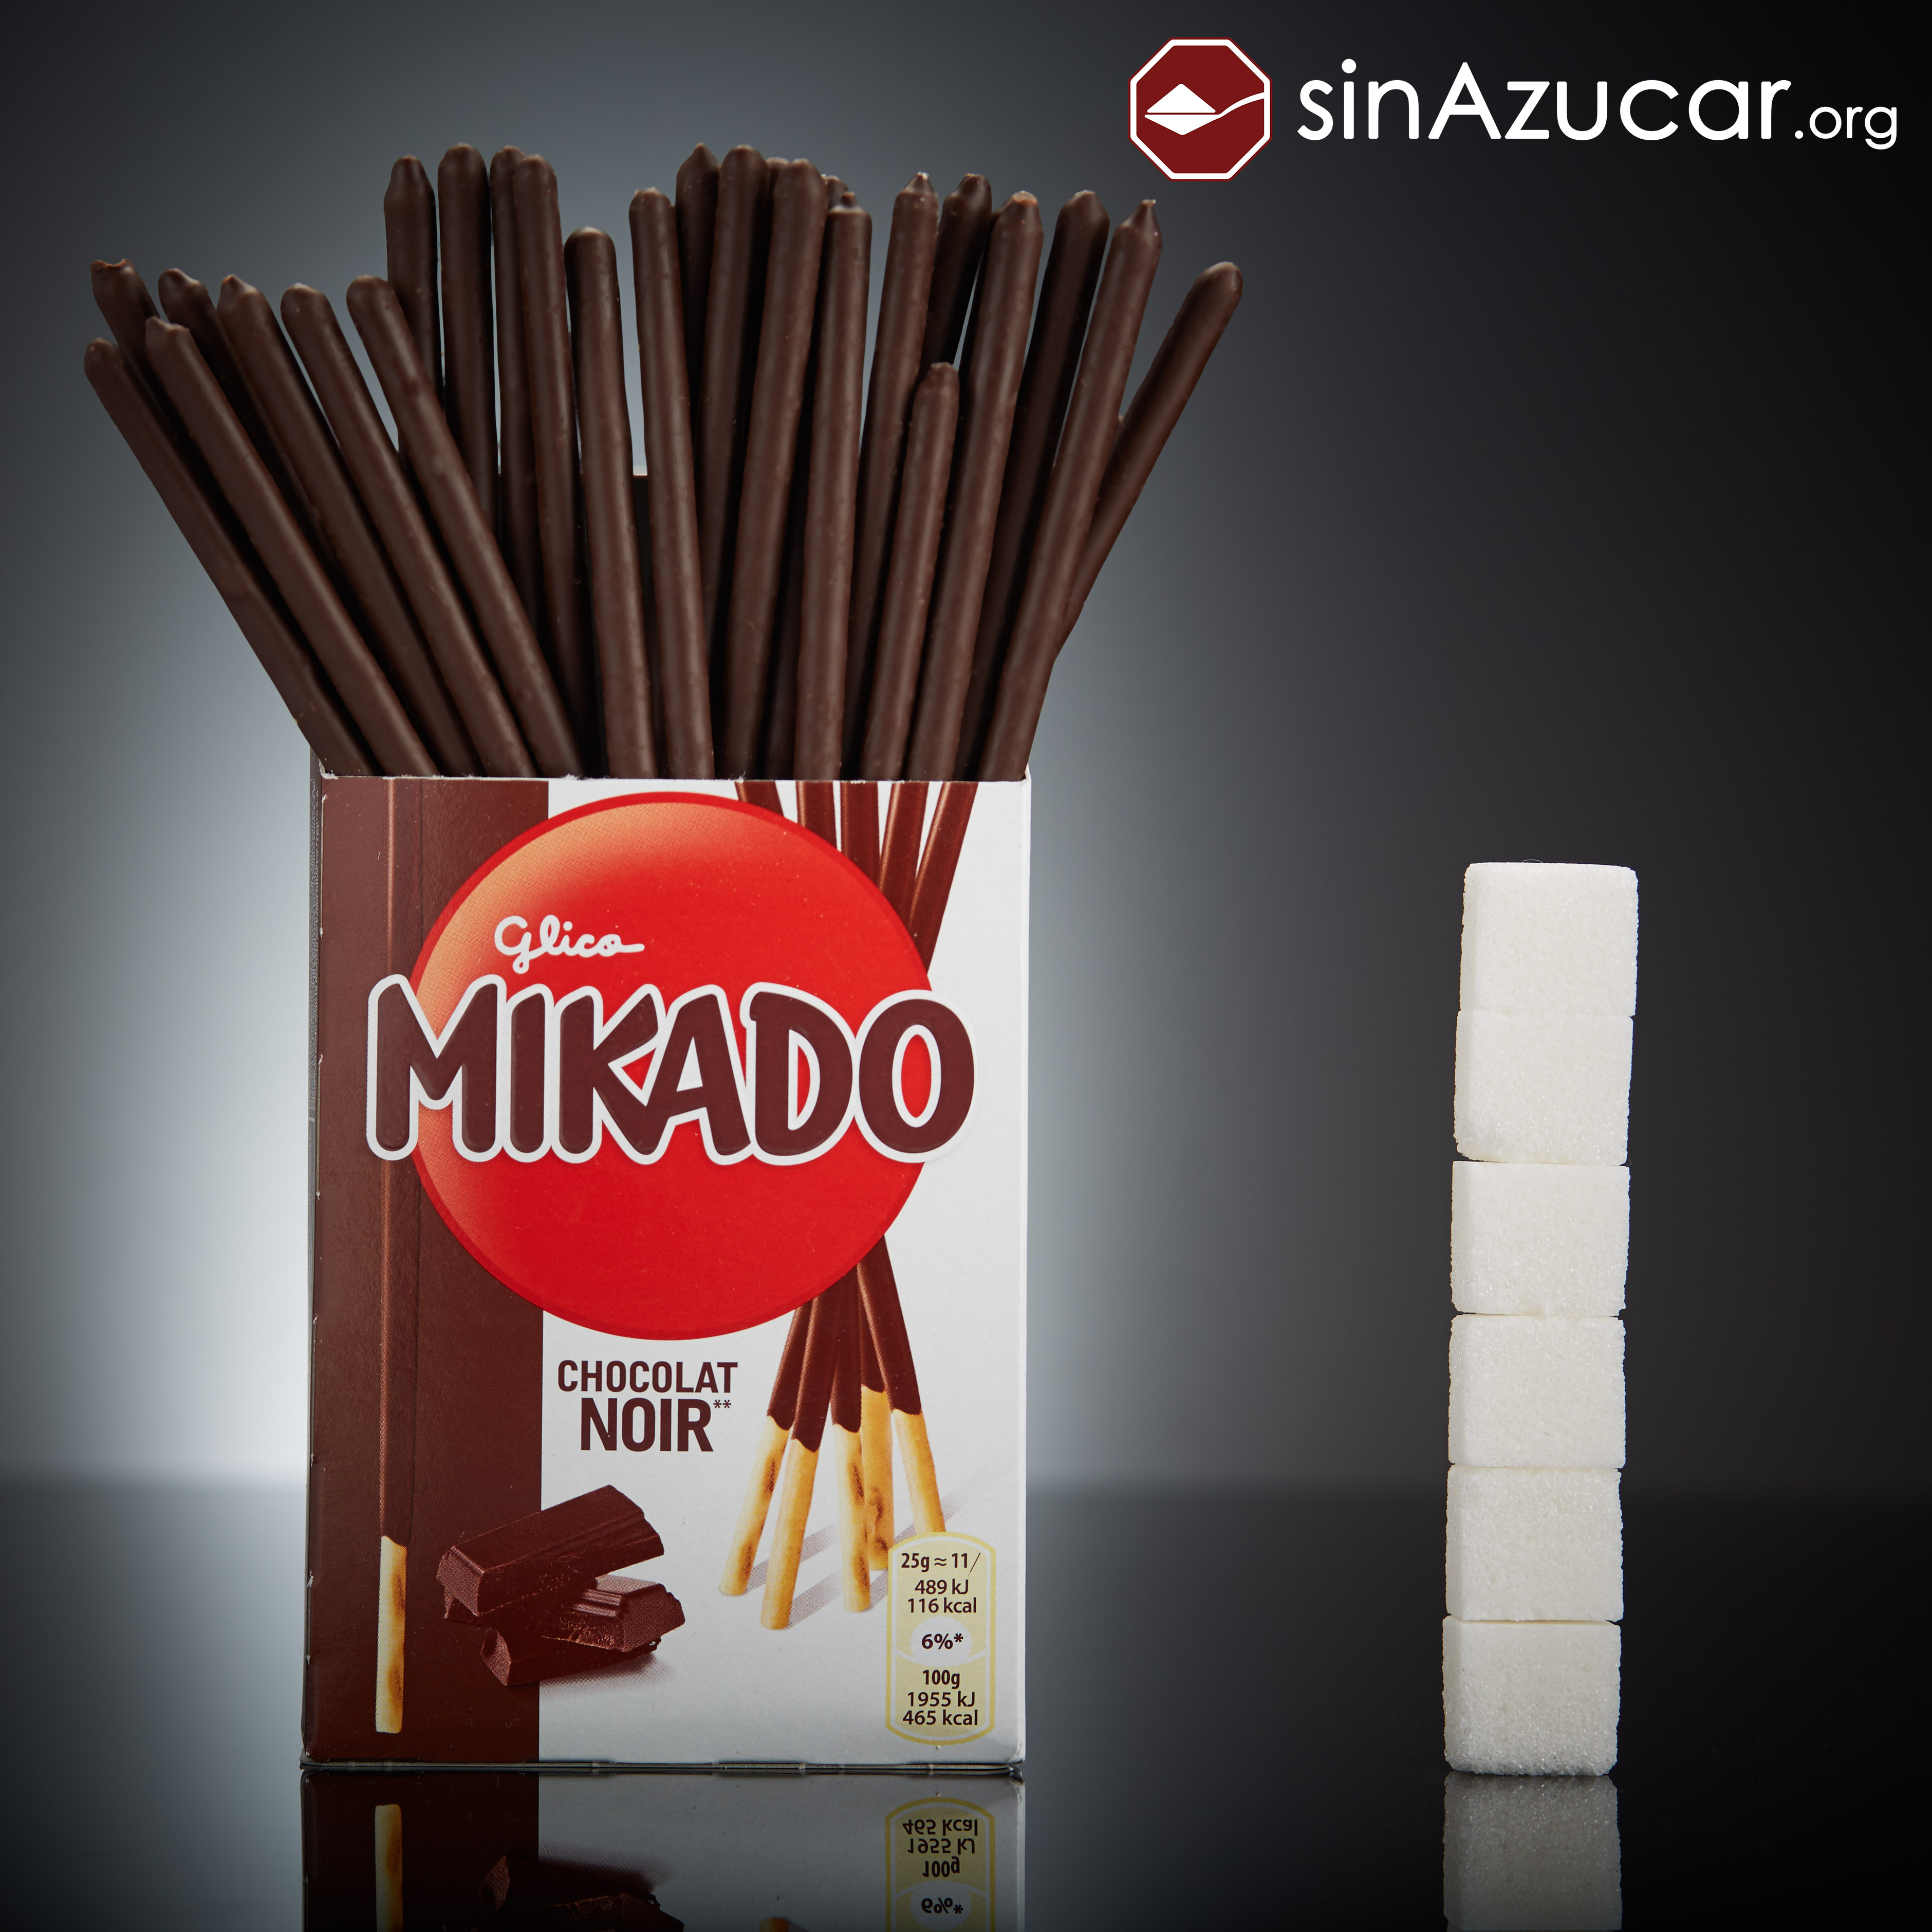 Mikado – sinAzucar.org